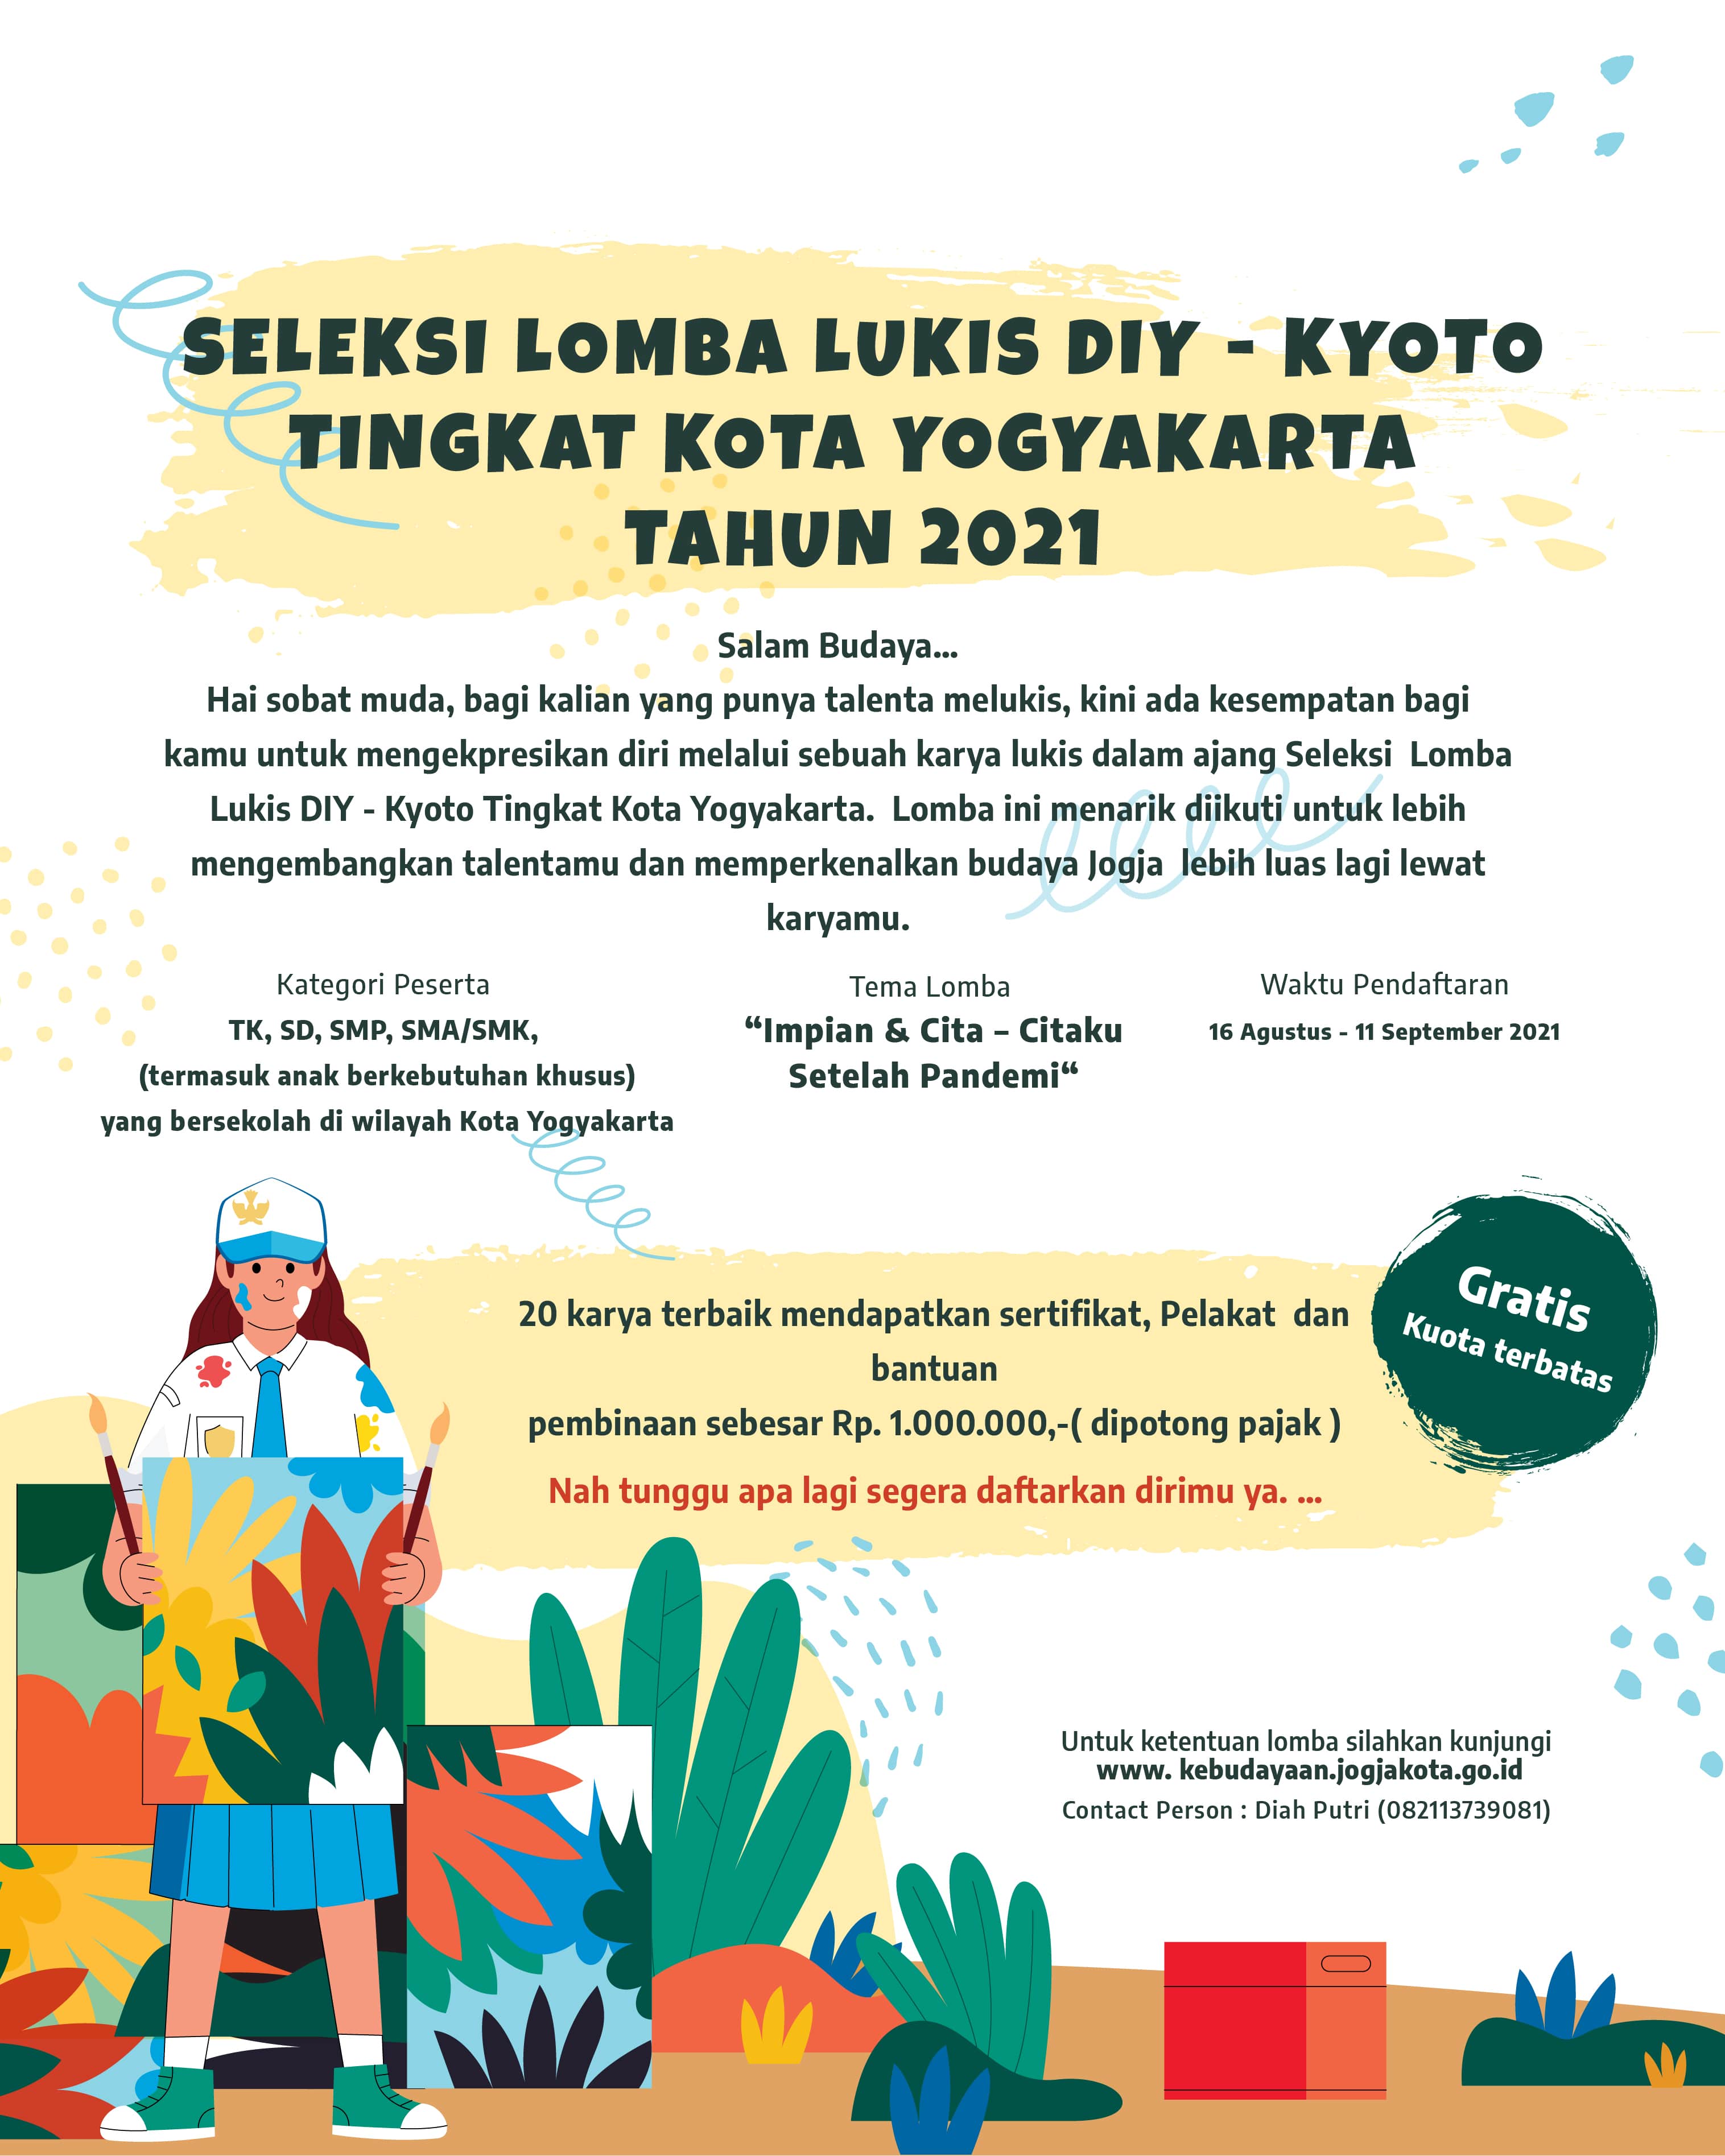 Seleksi Lomba Lukis DIY-Kyoto Tingkat Kota Yogyakarta Tahun 2021